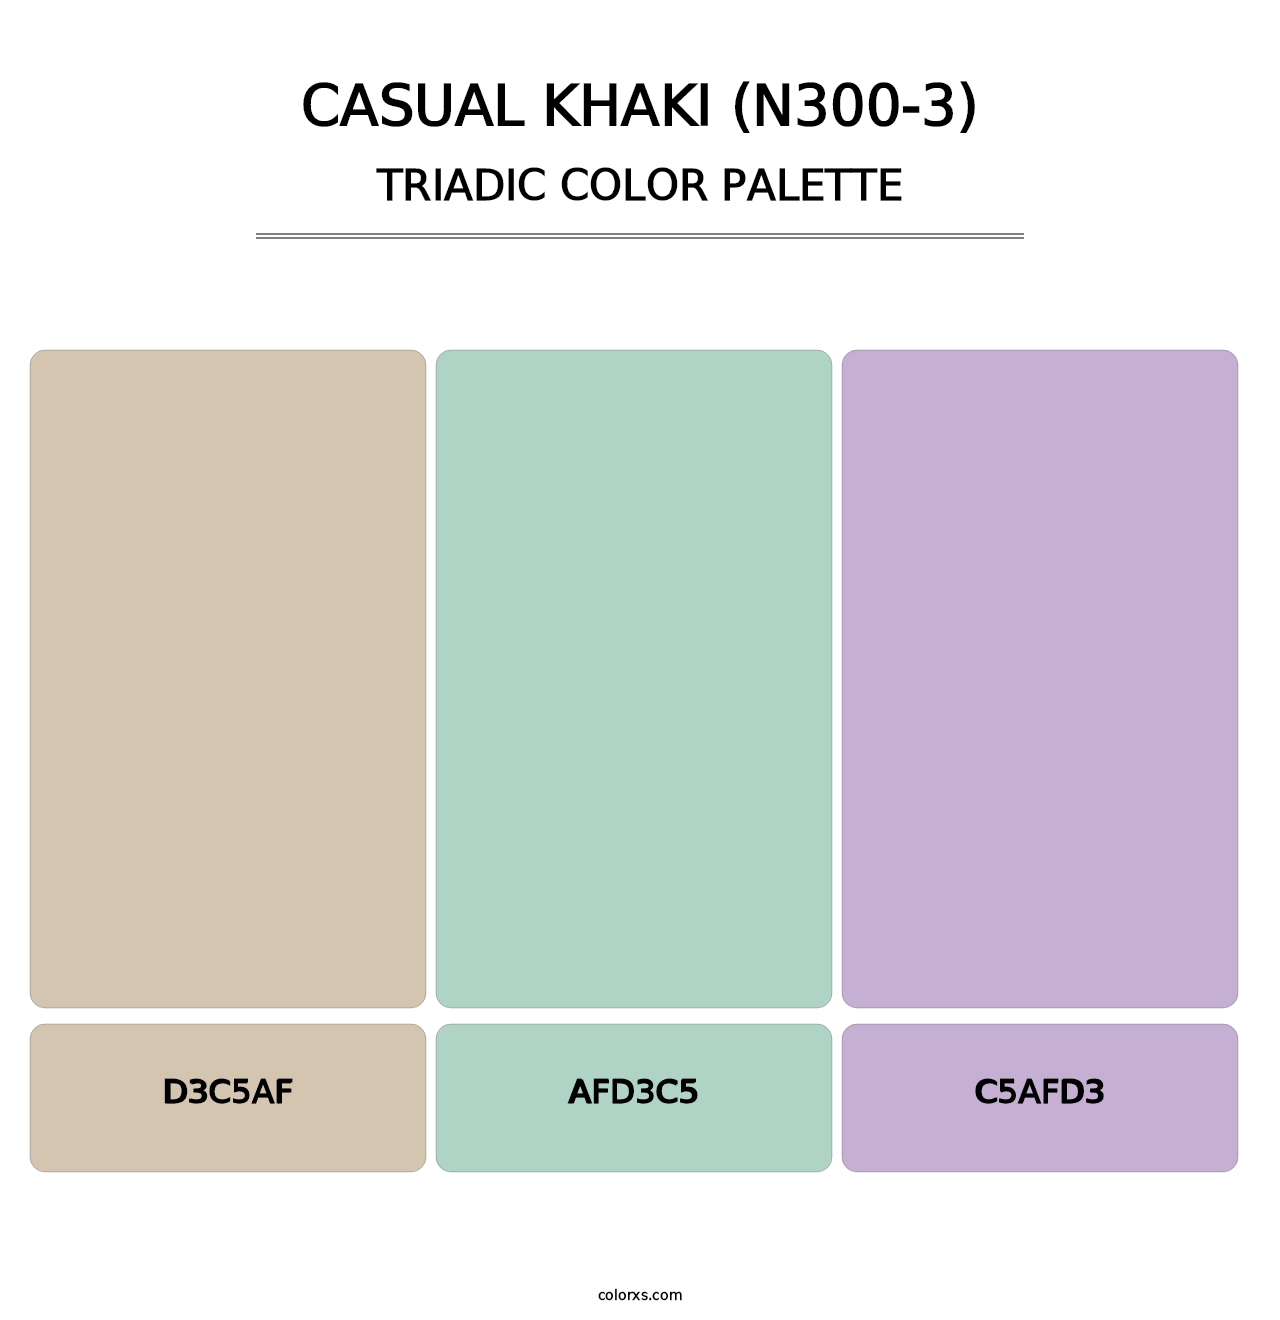 Casual Khaki (N300-3) - Triadic Color Palette